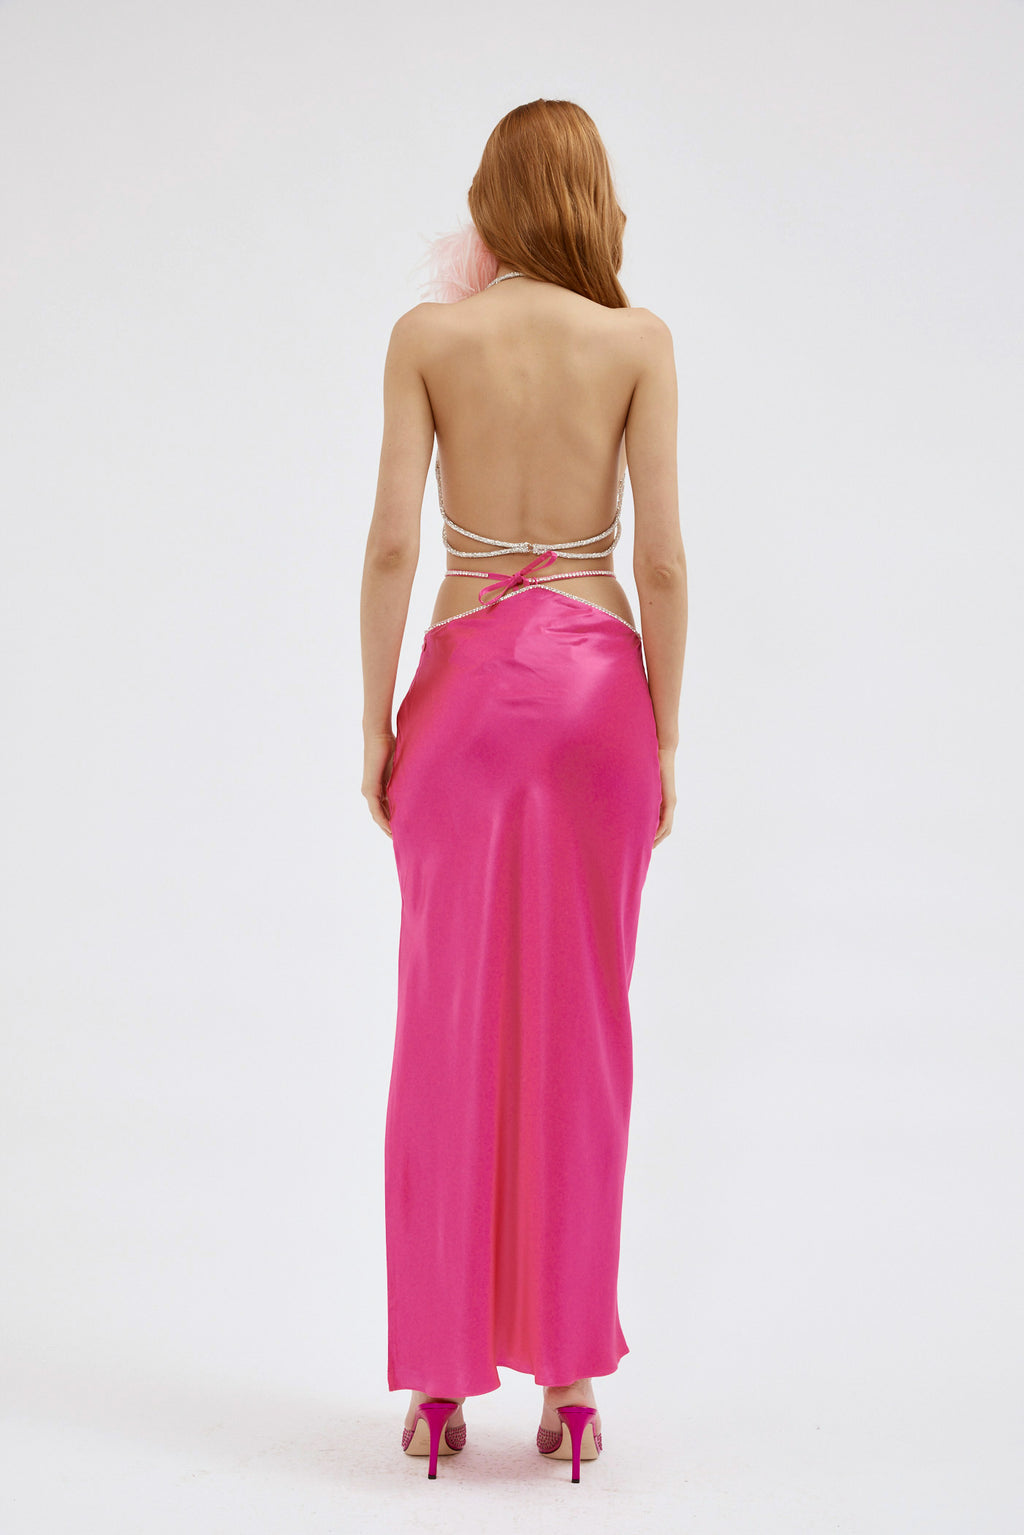 Crystalline Pink Bias Slip Skirt